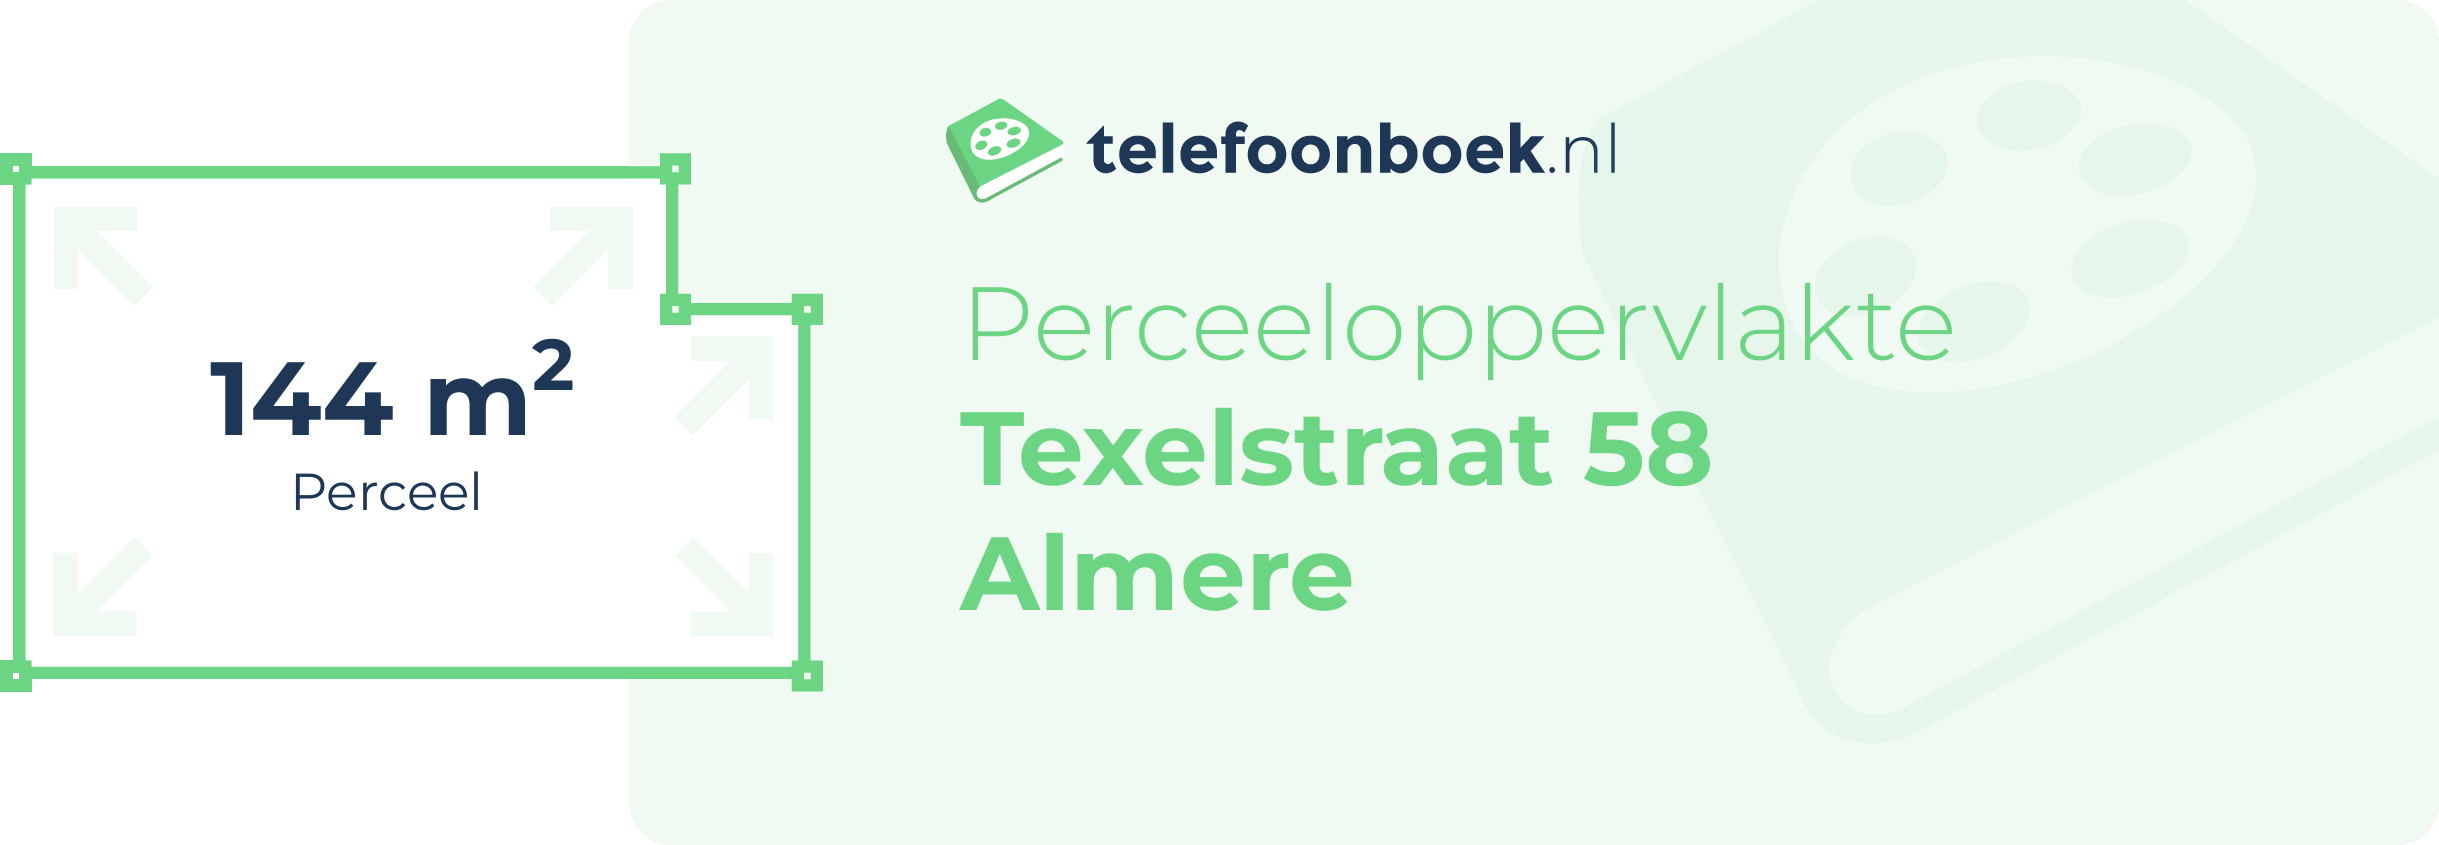 Perceeloppervlakte Texelstraat 58 Almere